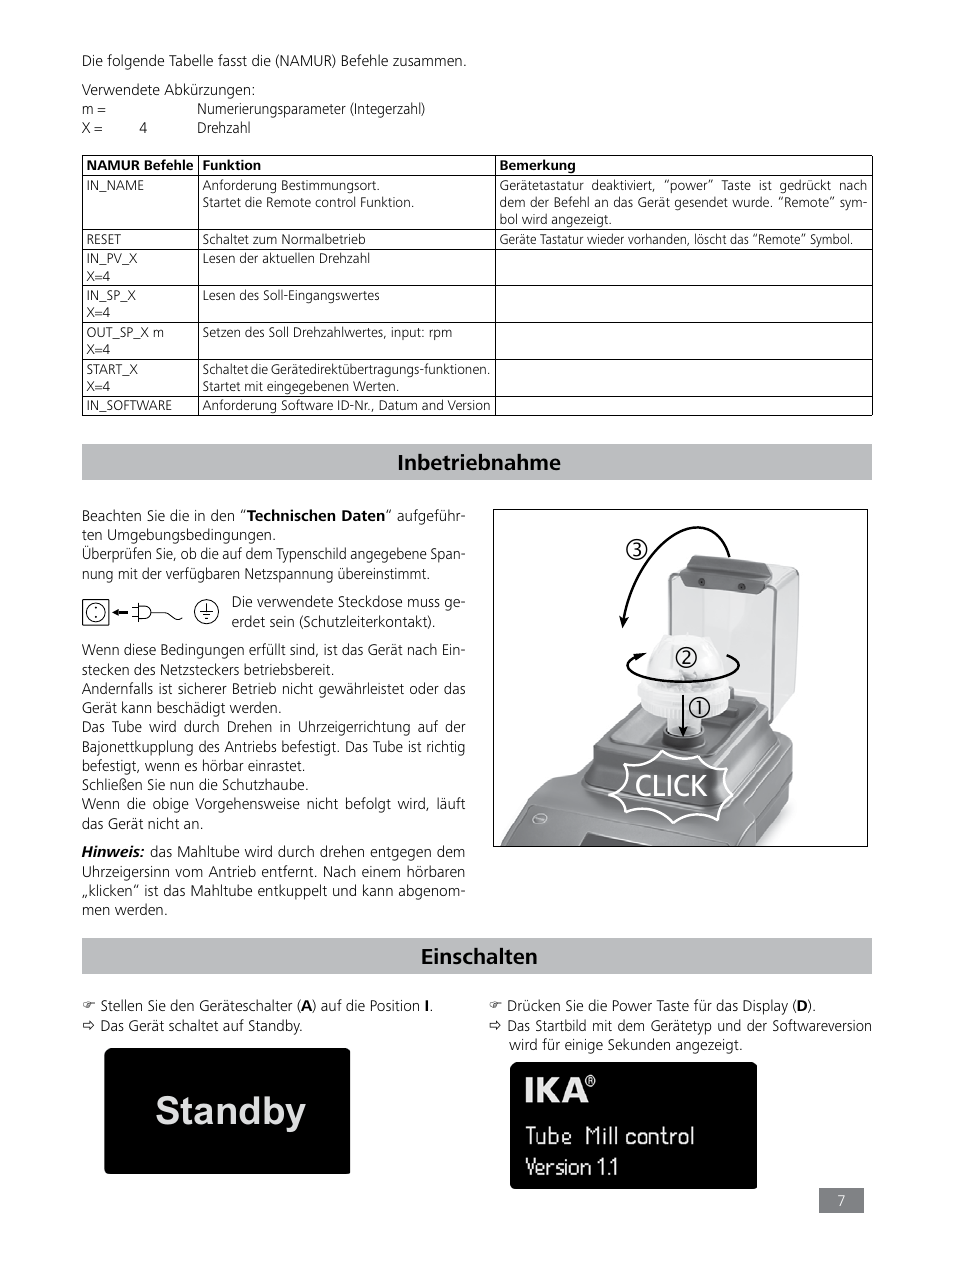 Standby, Click, Inbetriebnahme | Einschalten | IKA Tube Mill control User Manual | Page 7 / 64